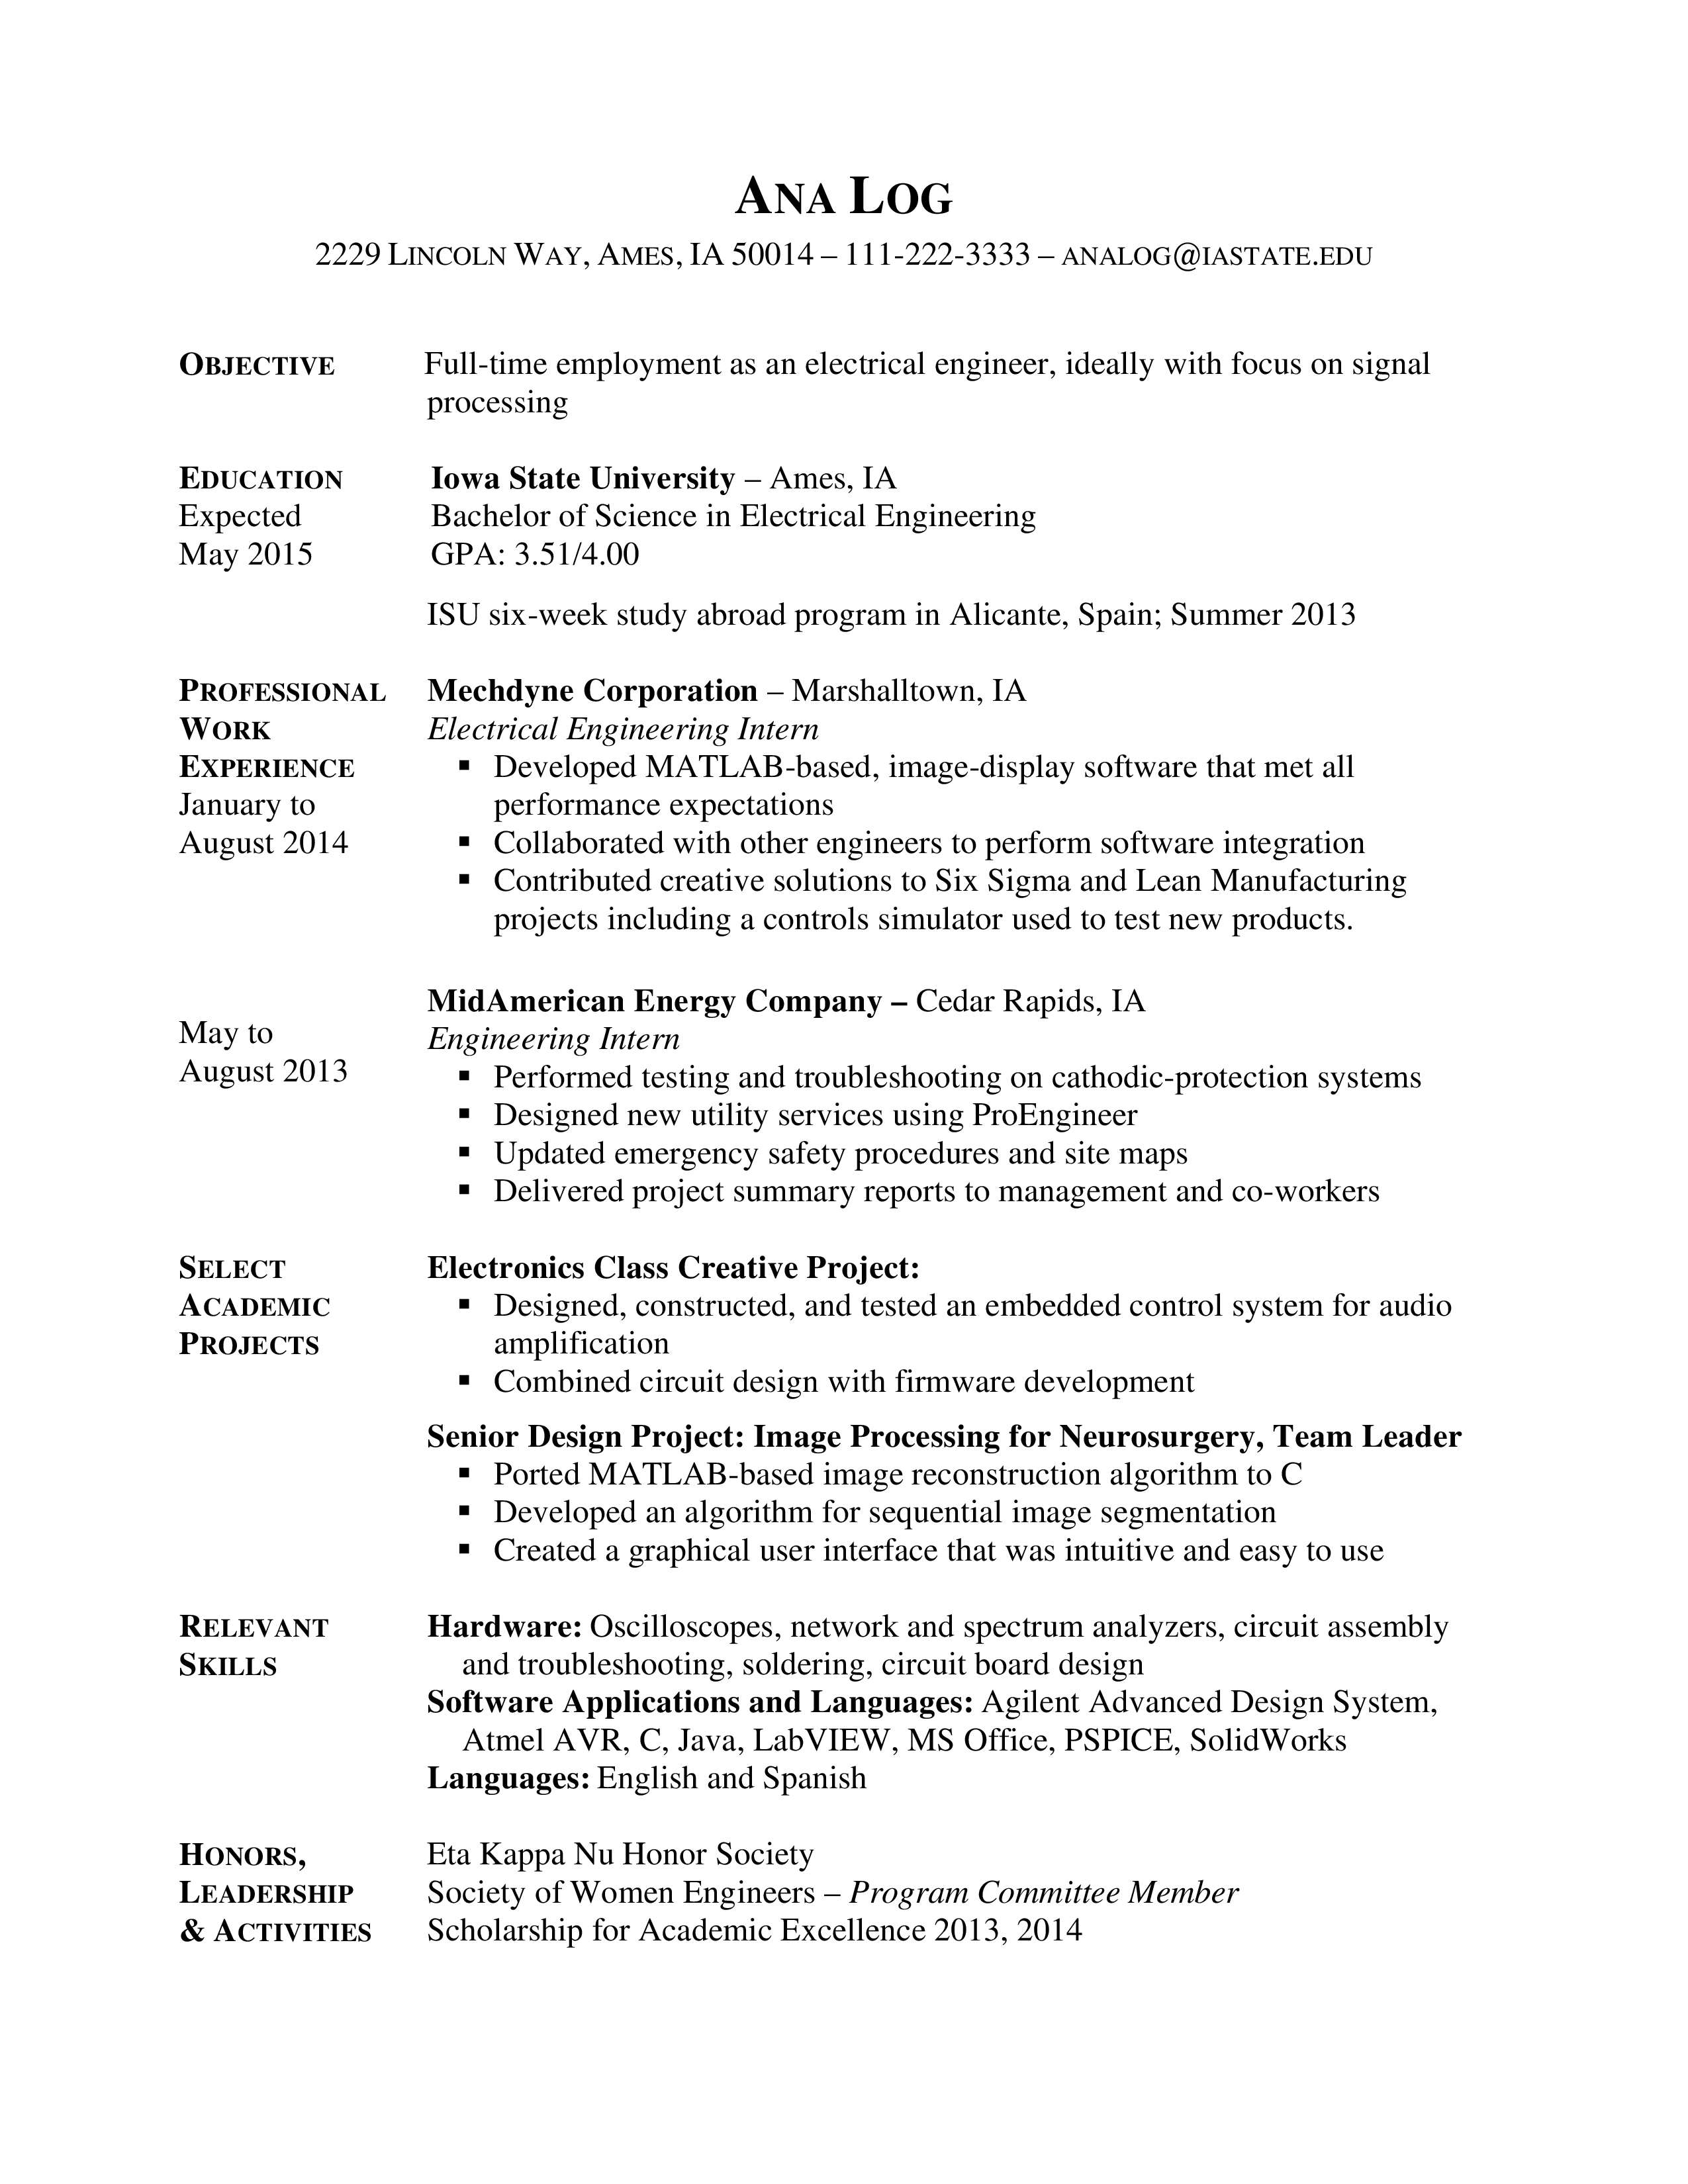 electrical engineering internship resume template